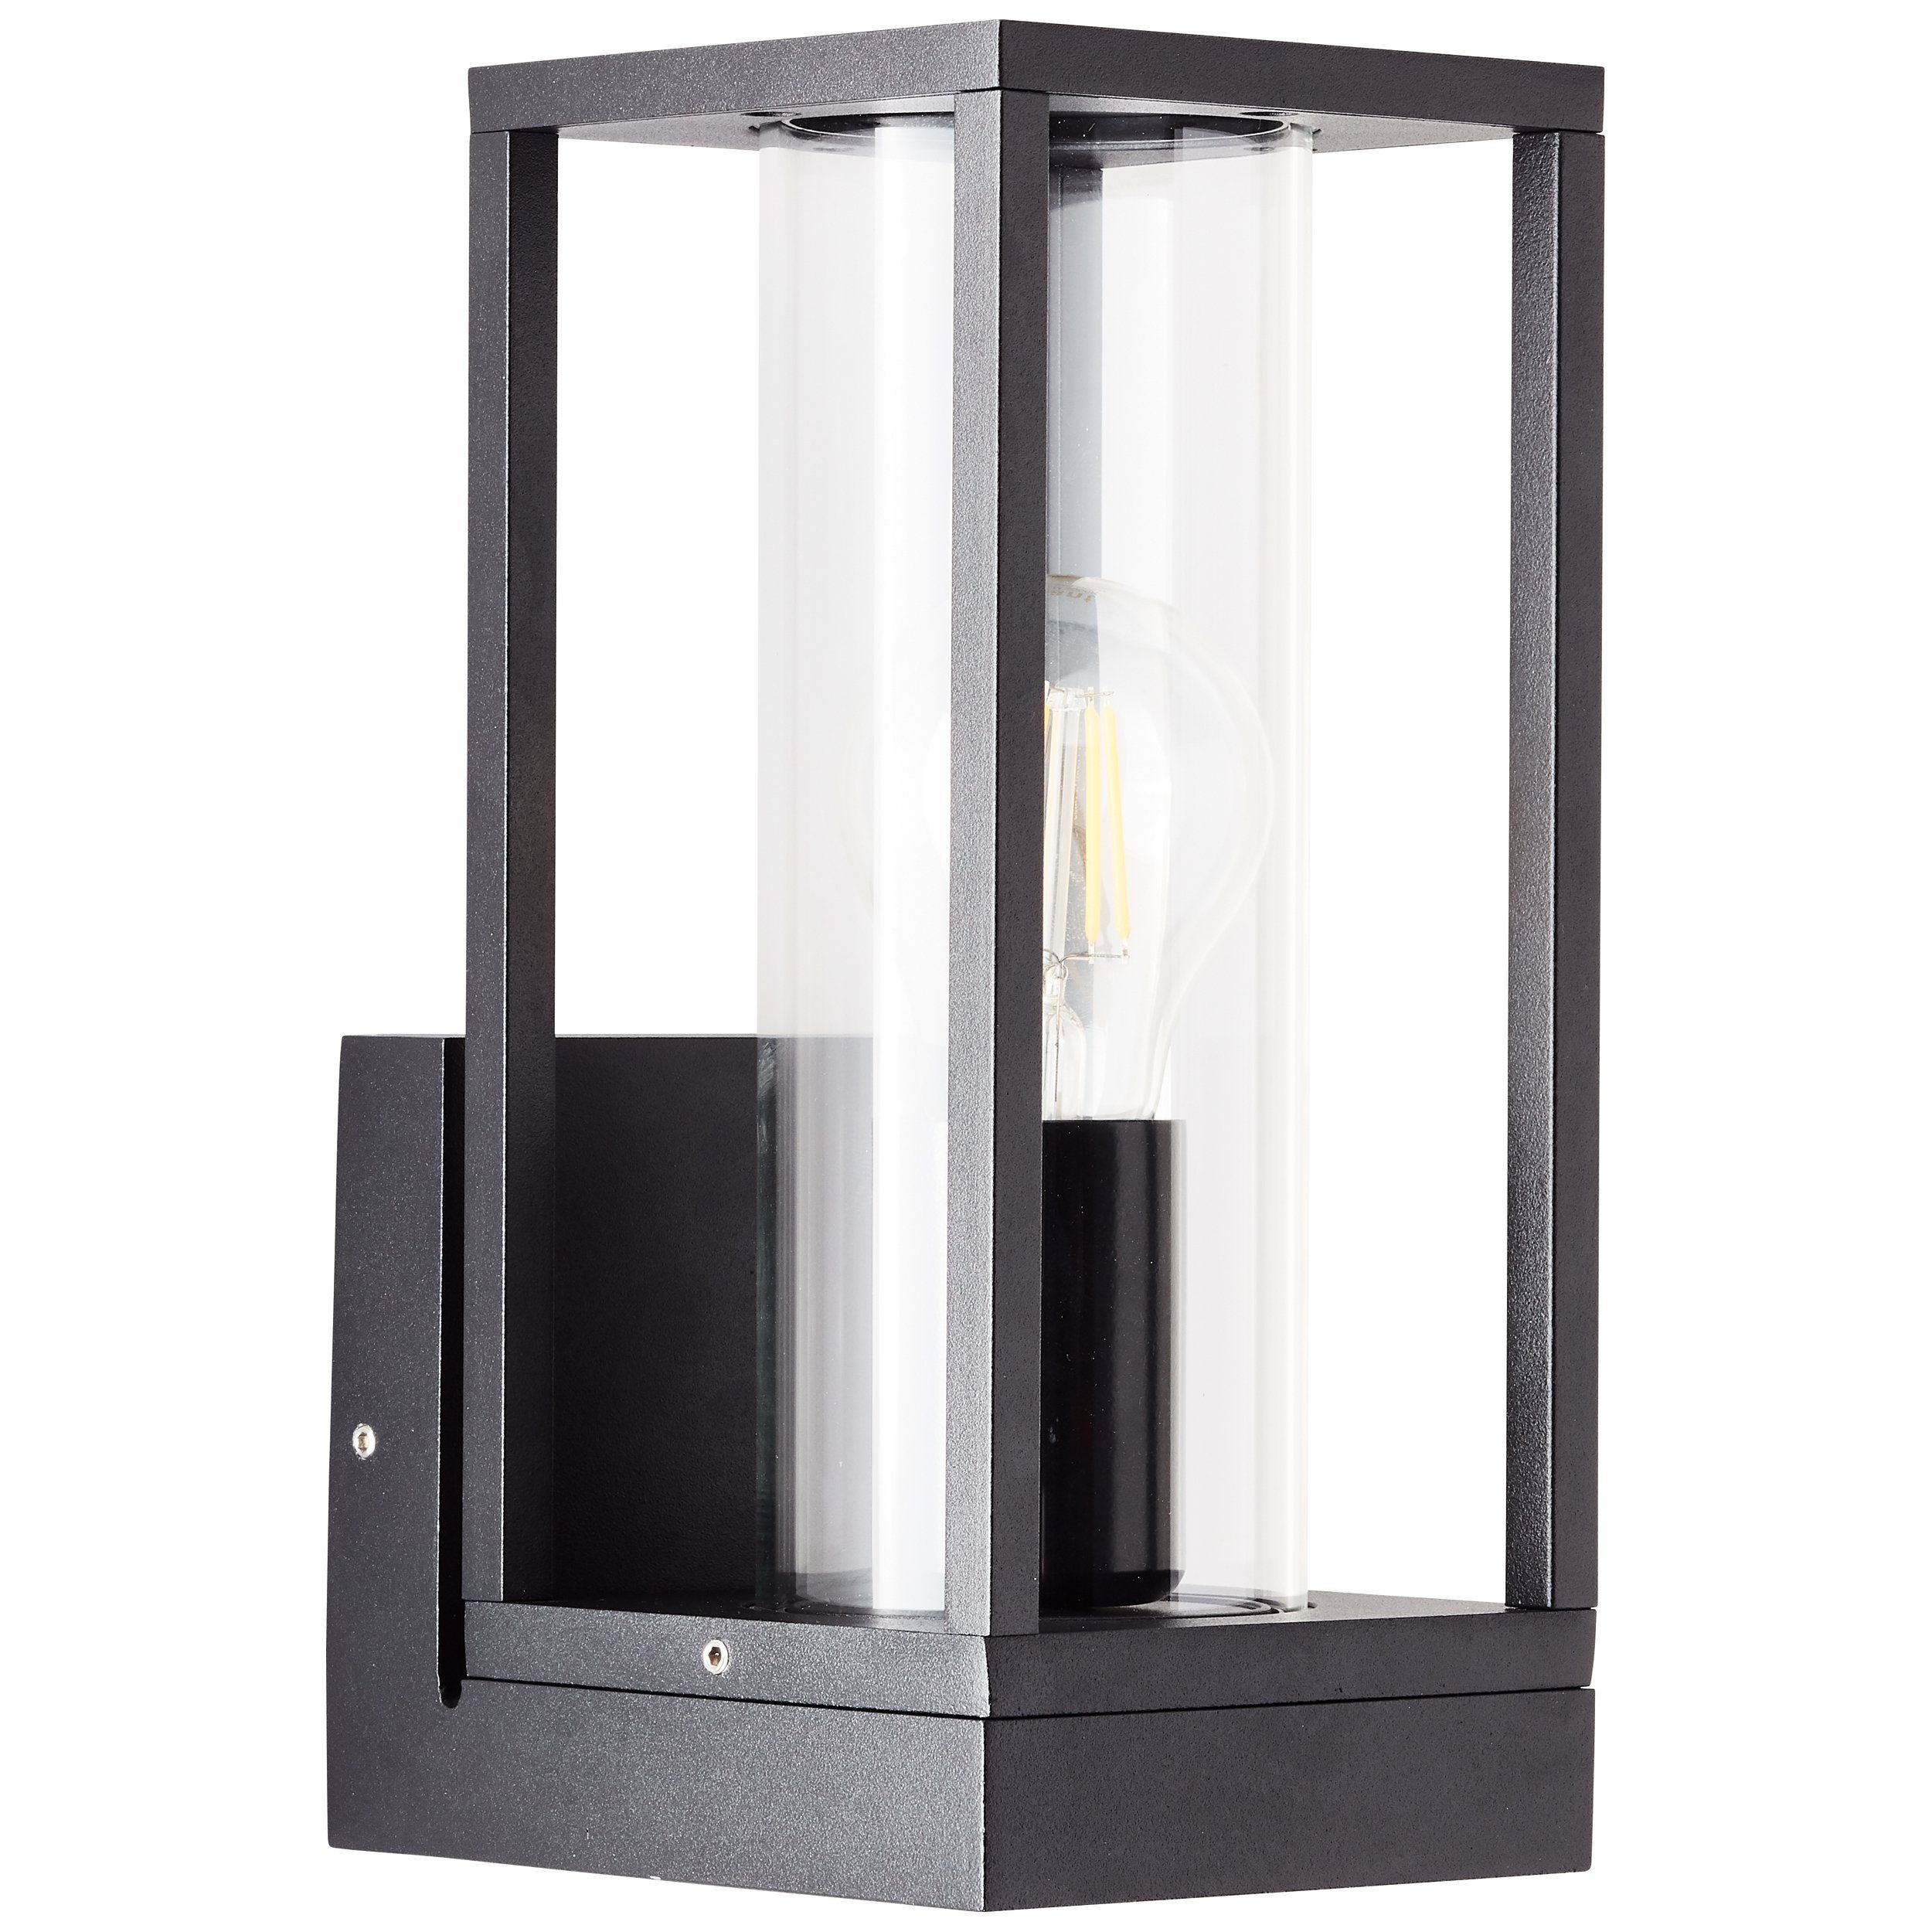 Brilliant LED Außen-Wandleuchte Dipton, Aluminium/Glas, 1x Außenwandleuchte 40 sand E27, A60, Dipton schwarz